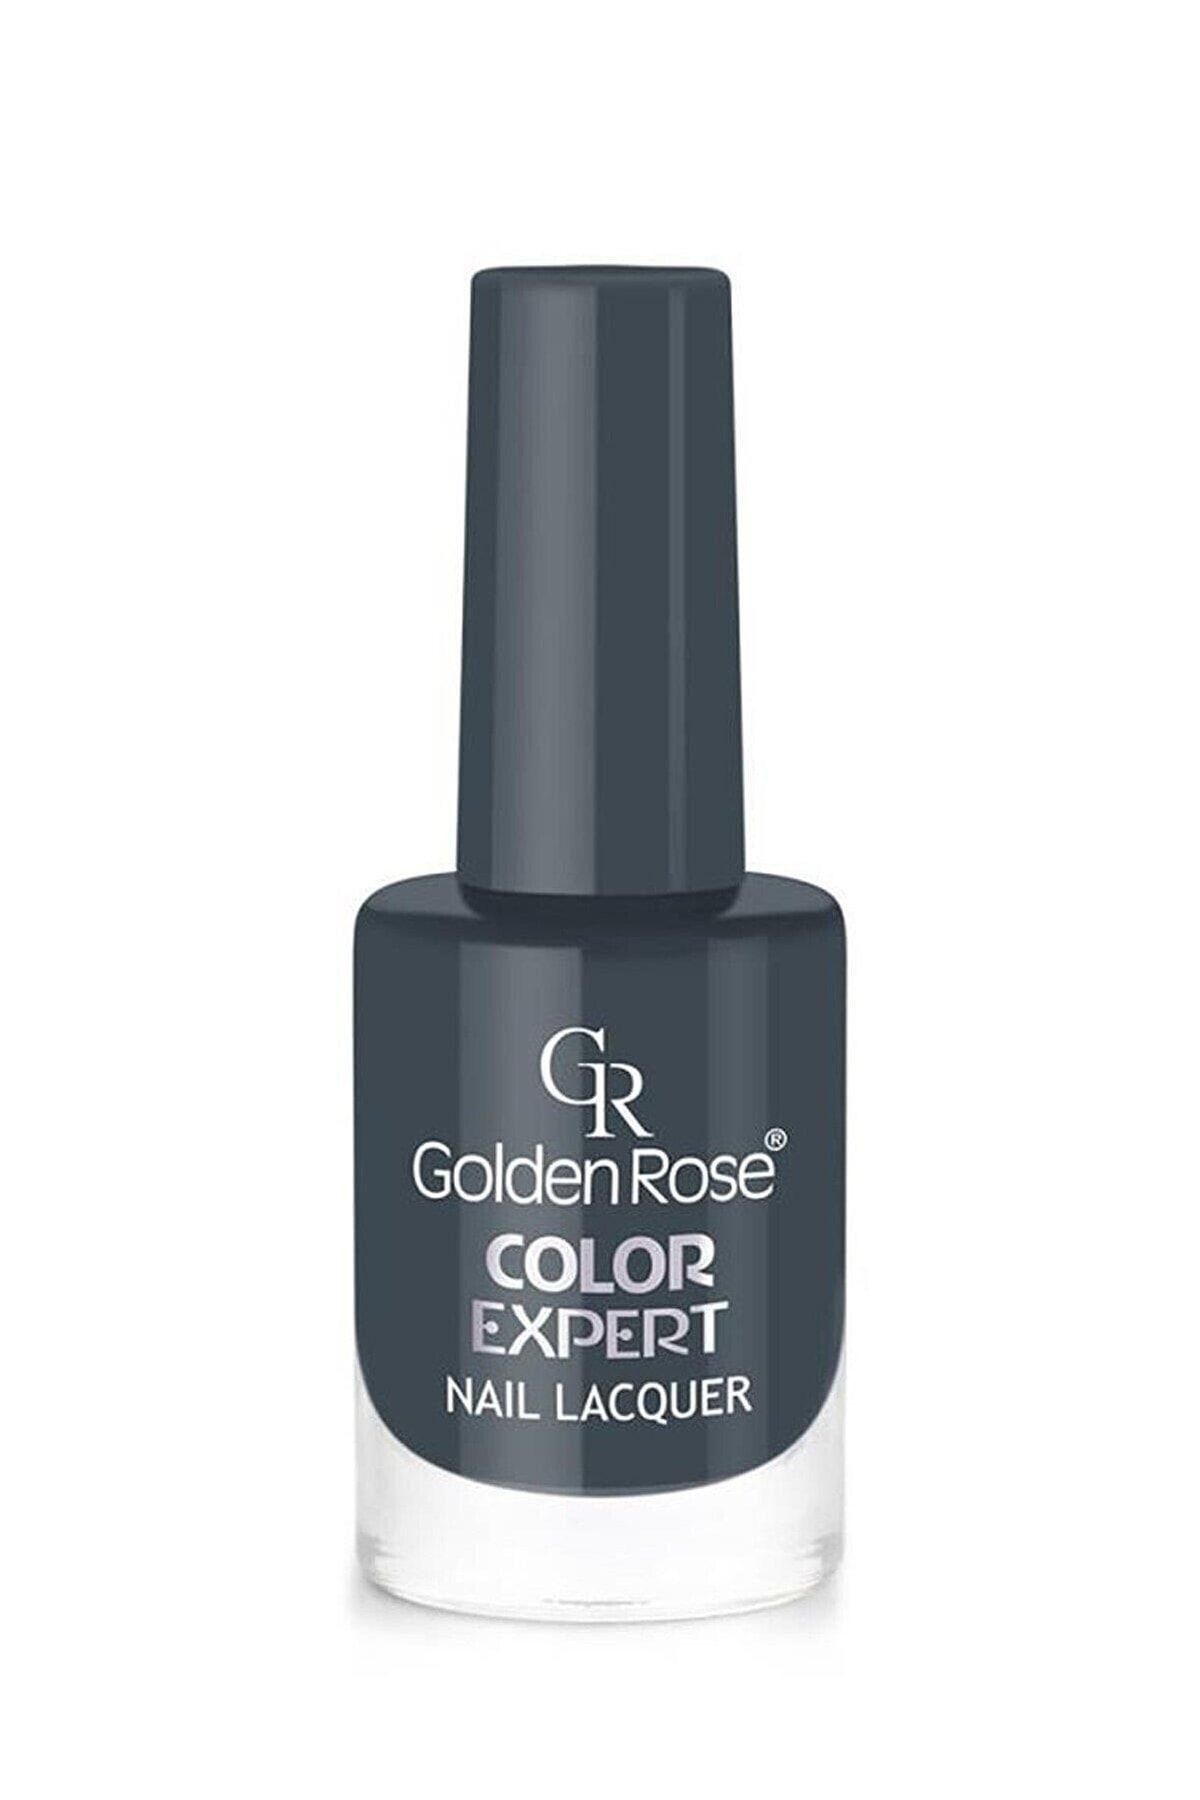 Golden Rose Oje - Color Expert Nail Lacquer No: 91 8691190703912 Ogcx